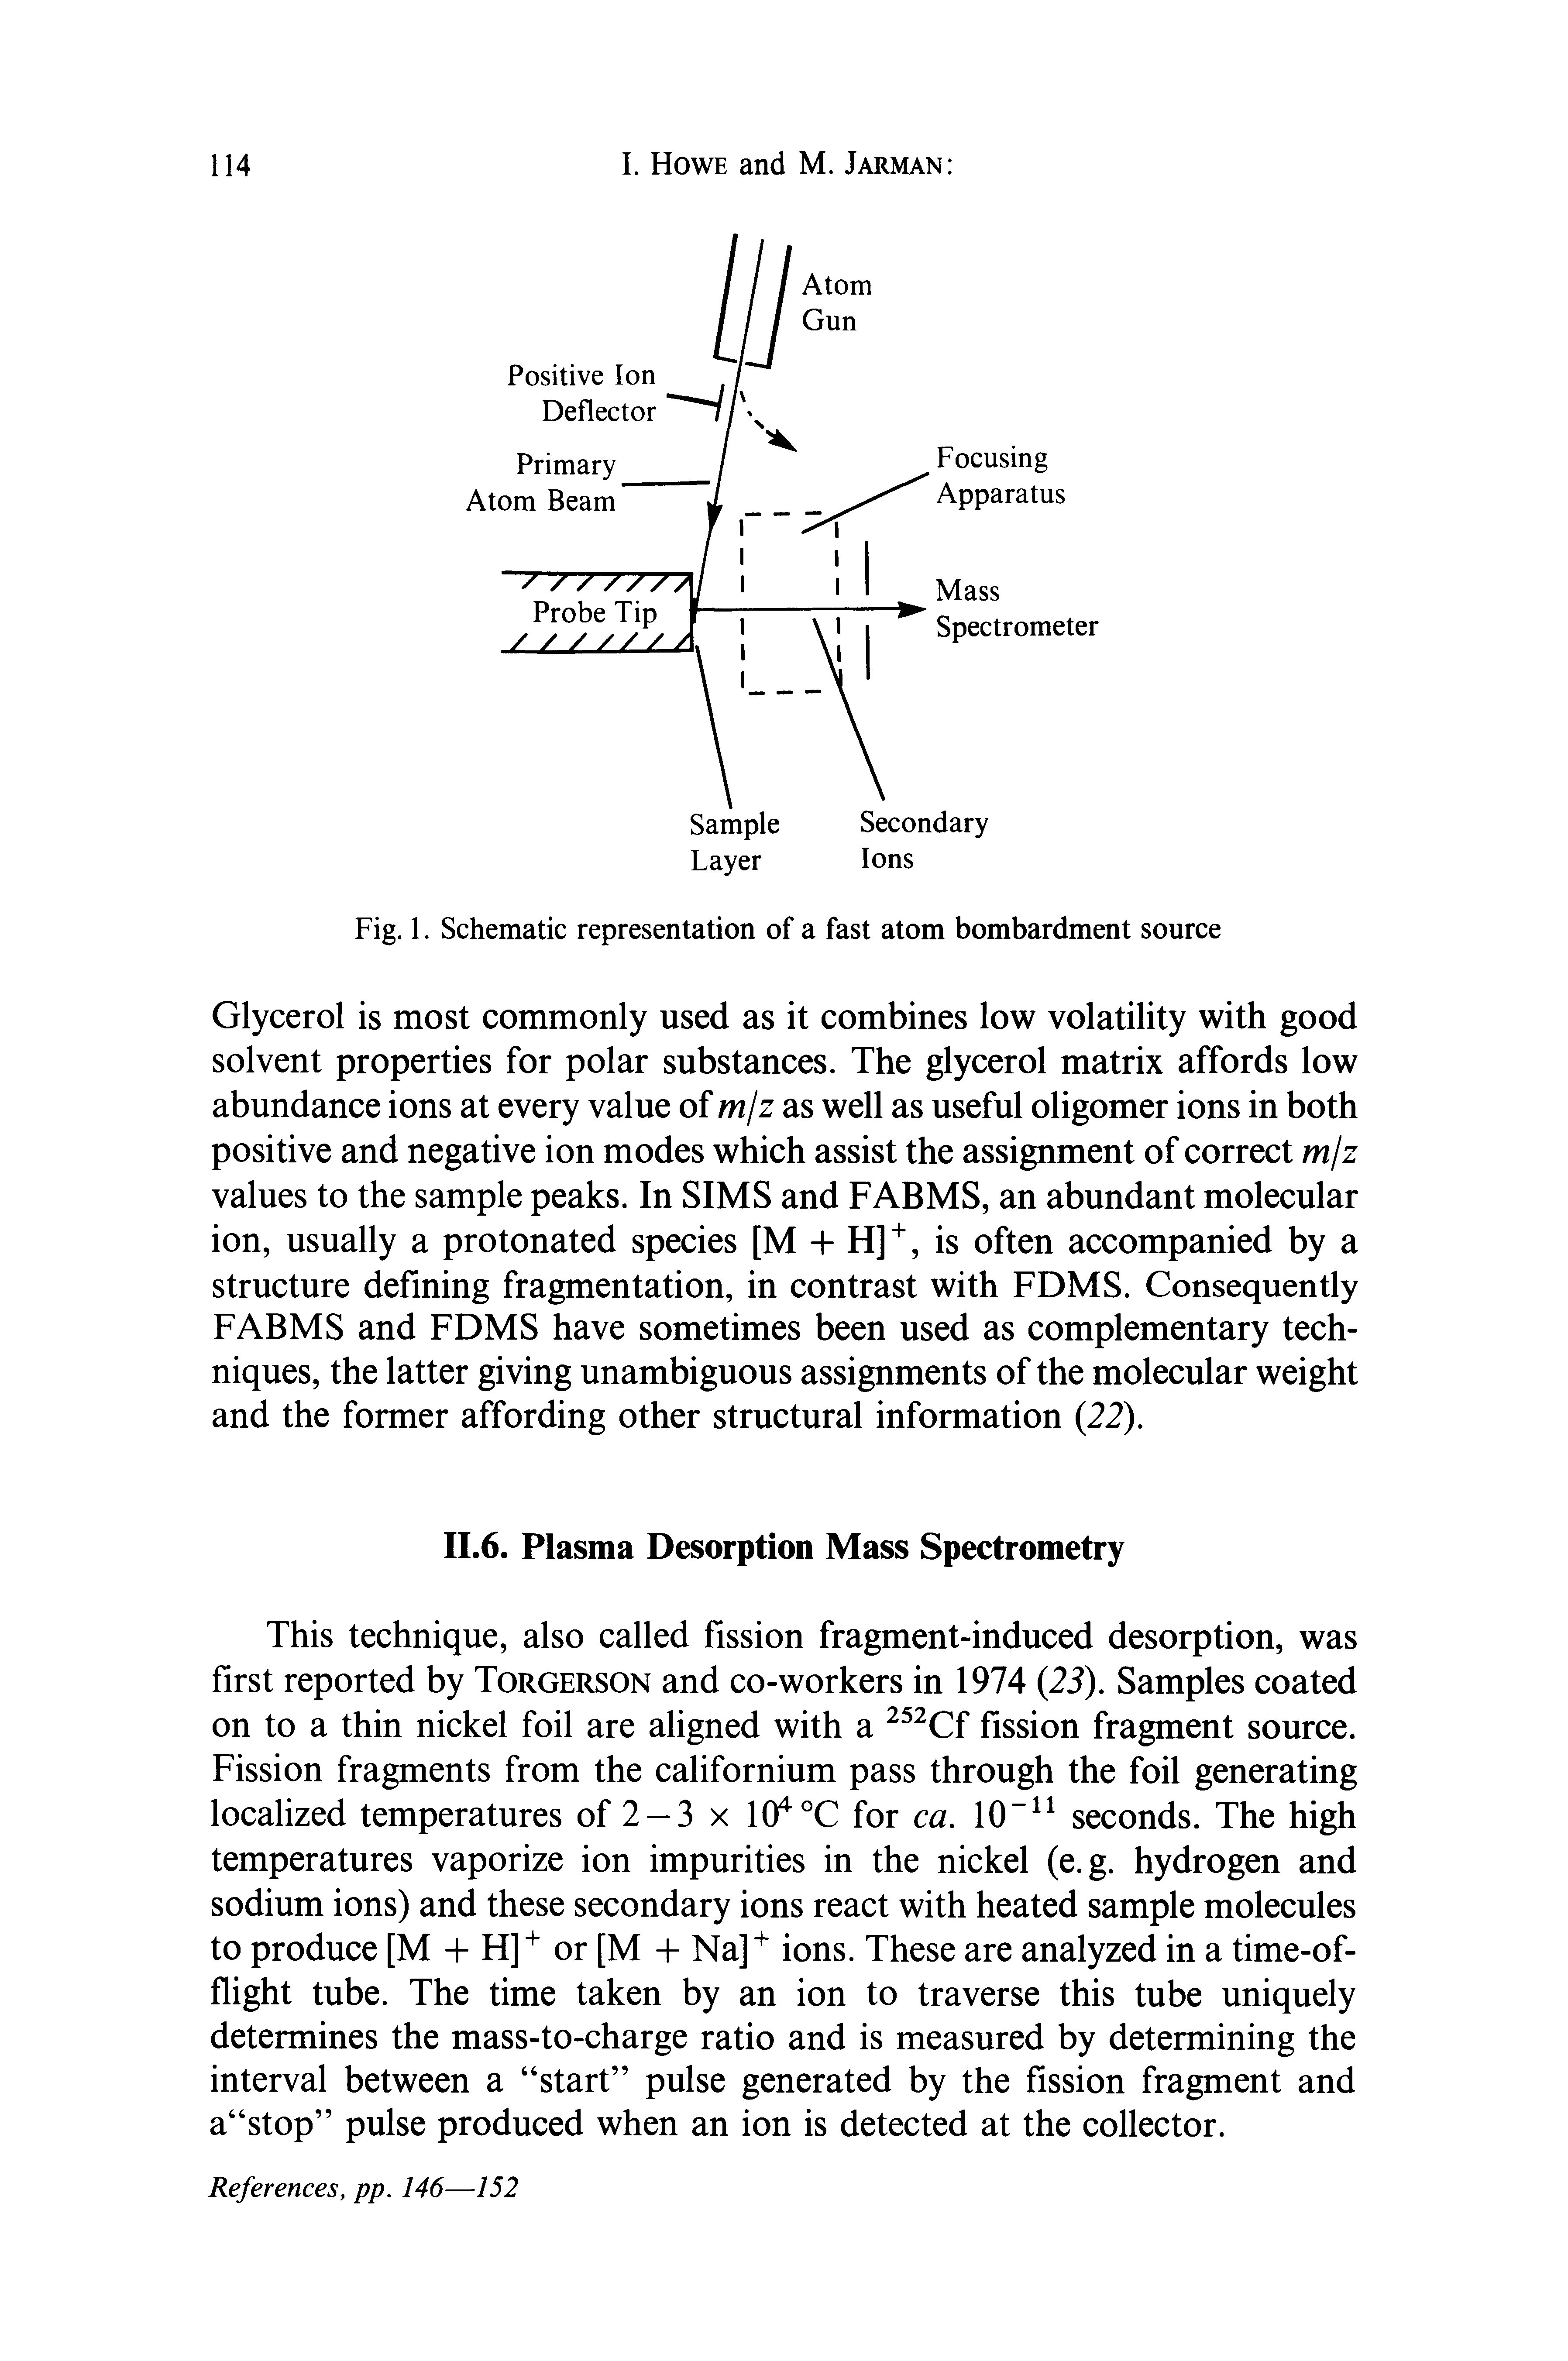 Fig. 1. Schematic representation of a fast atom bombardment source...